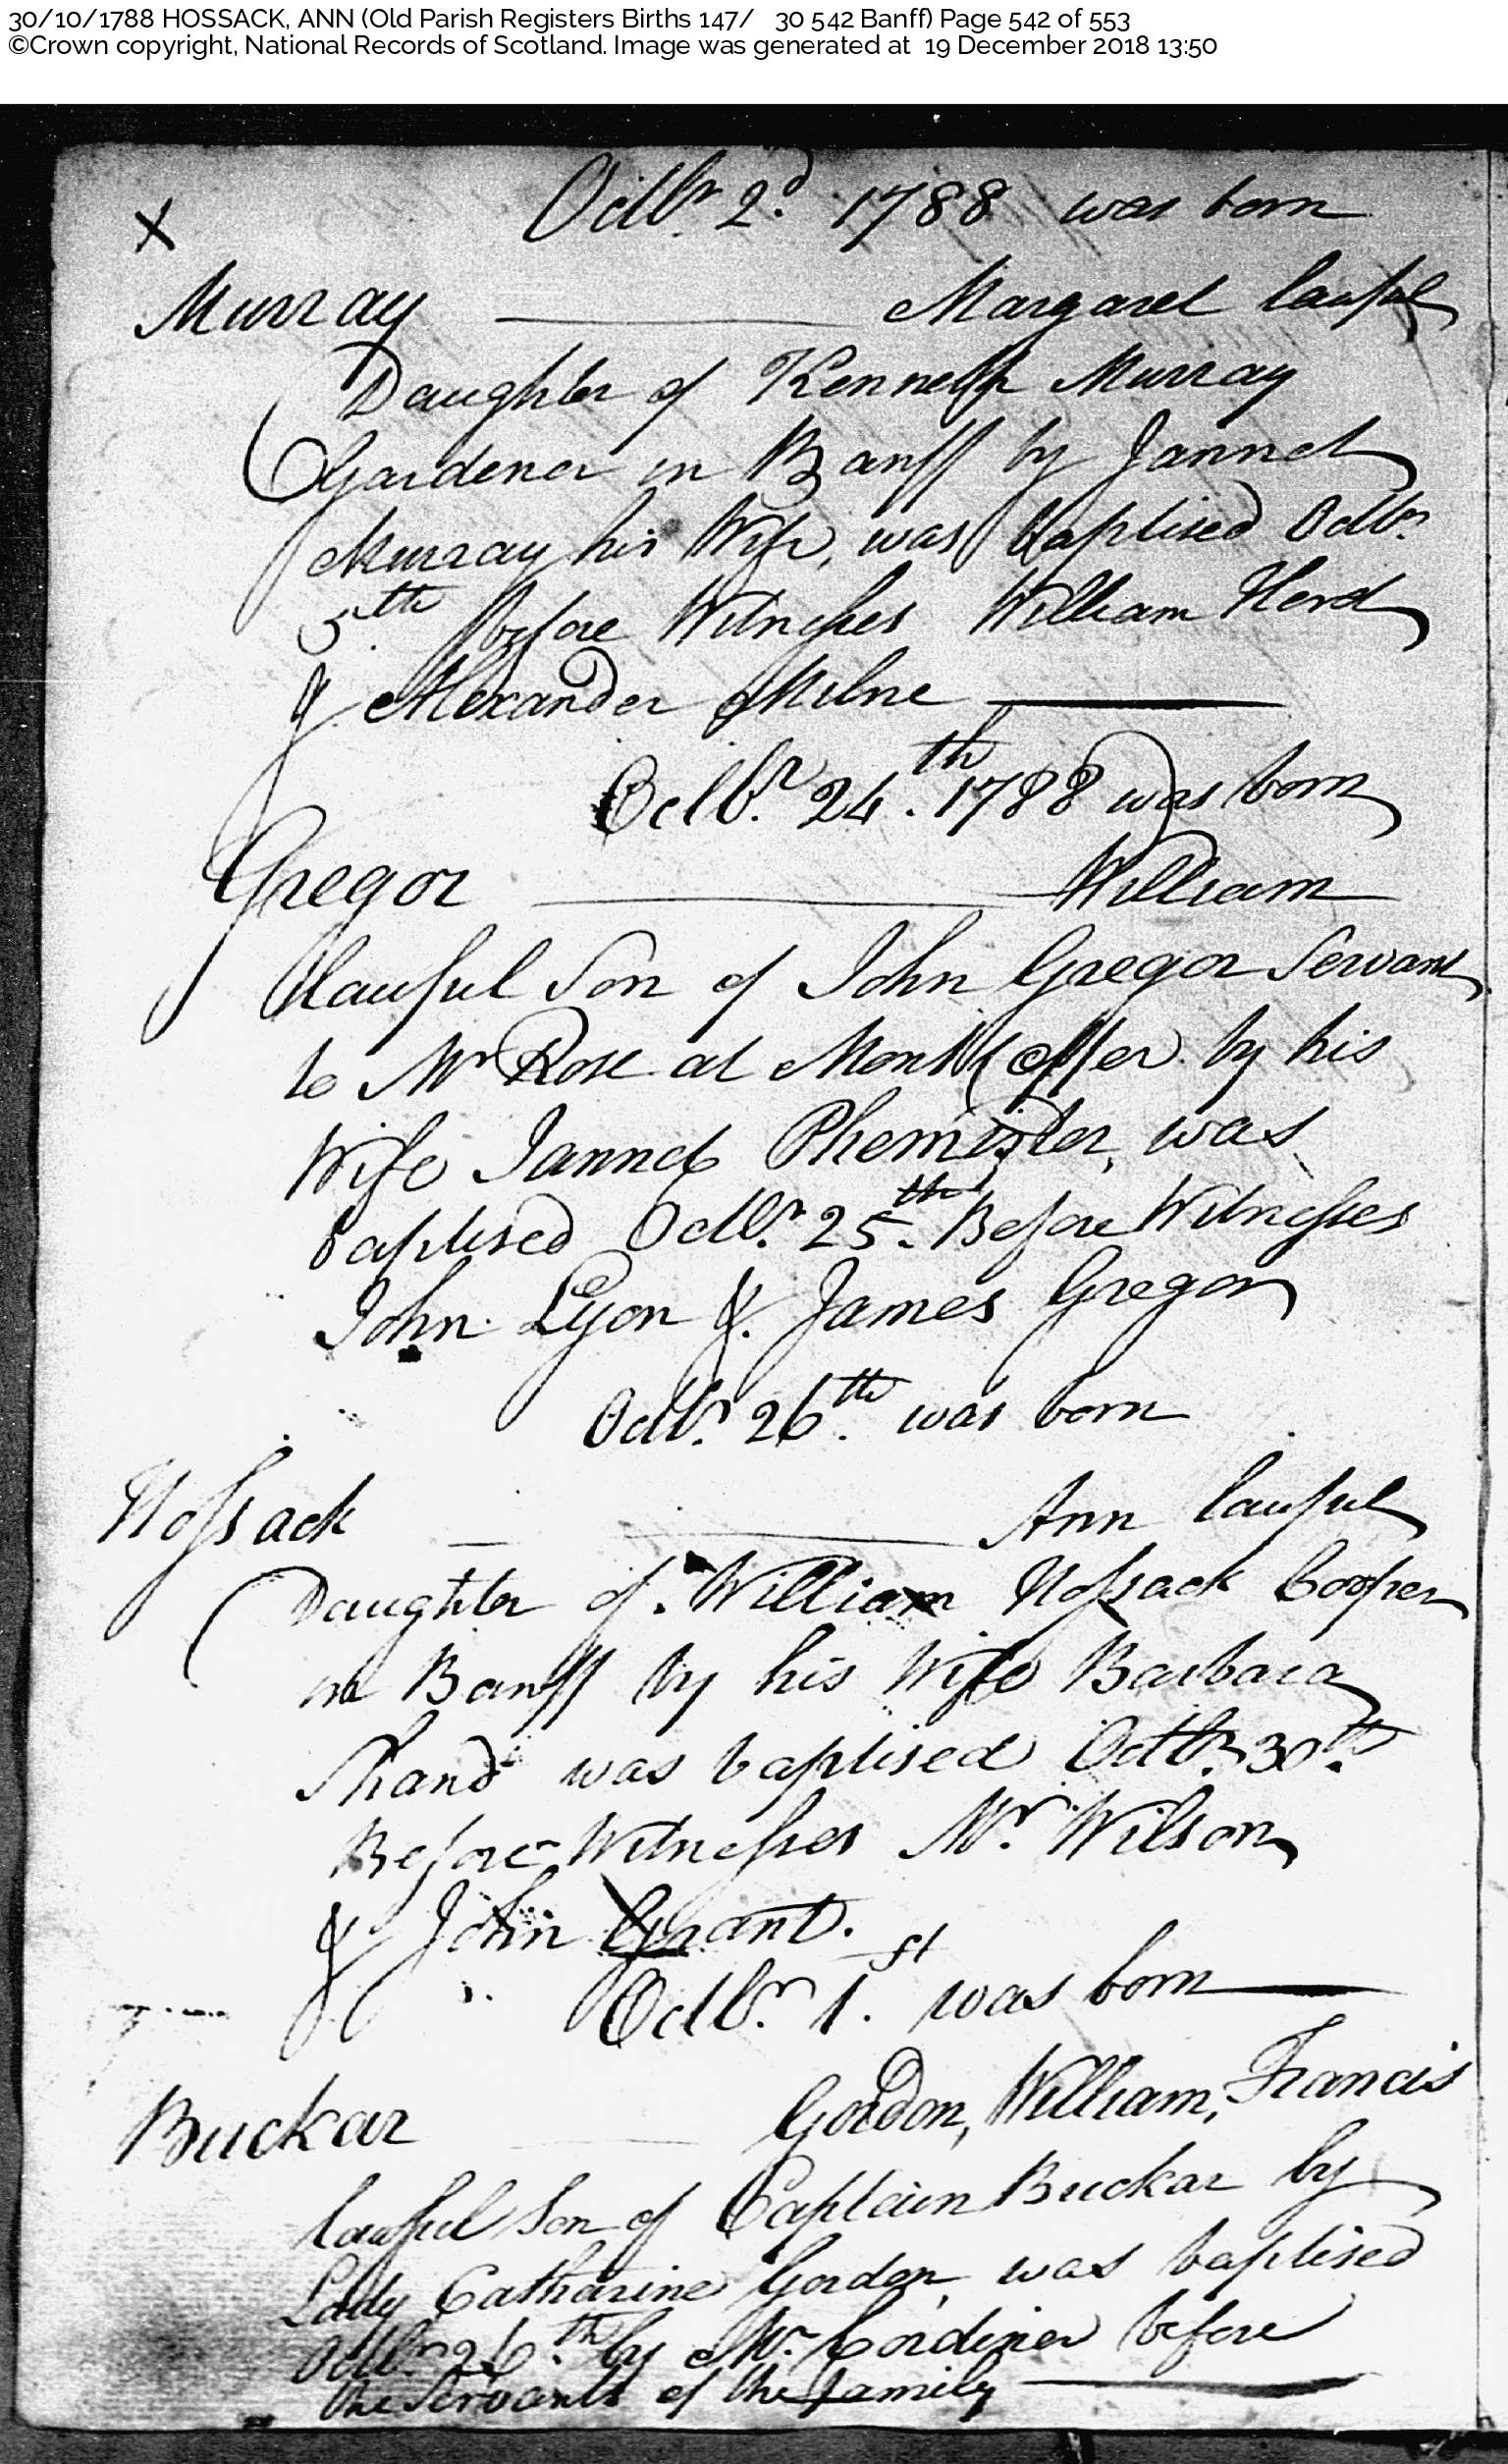 AnnHossack_B1788 Banff, October 26, 1788